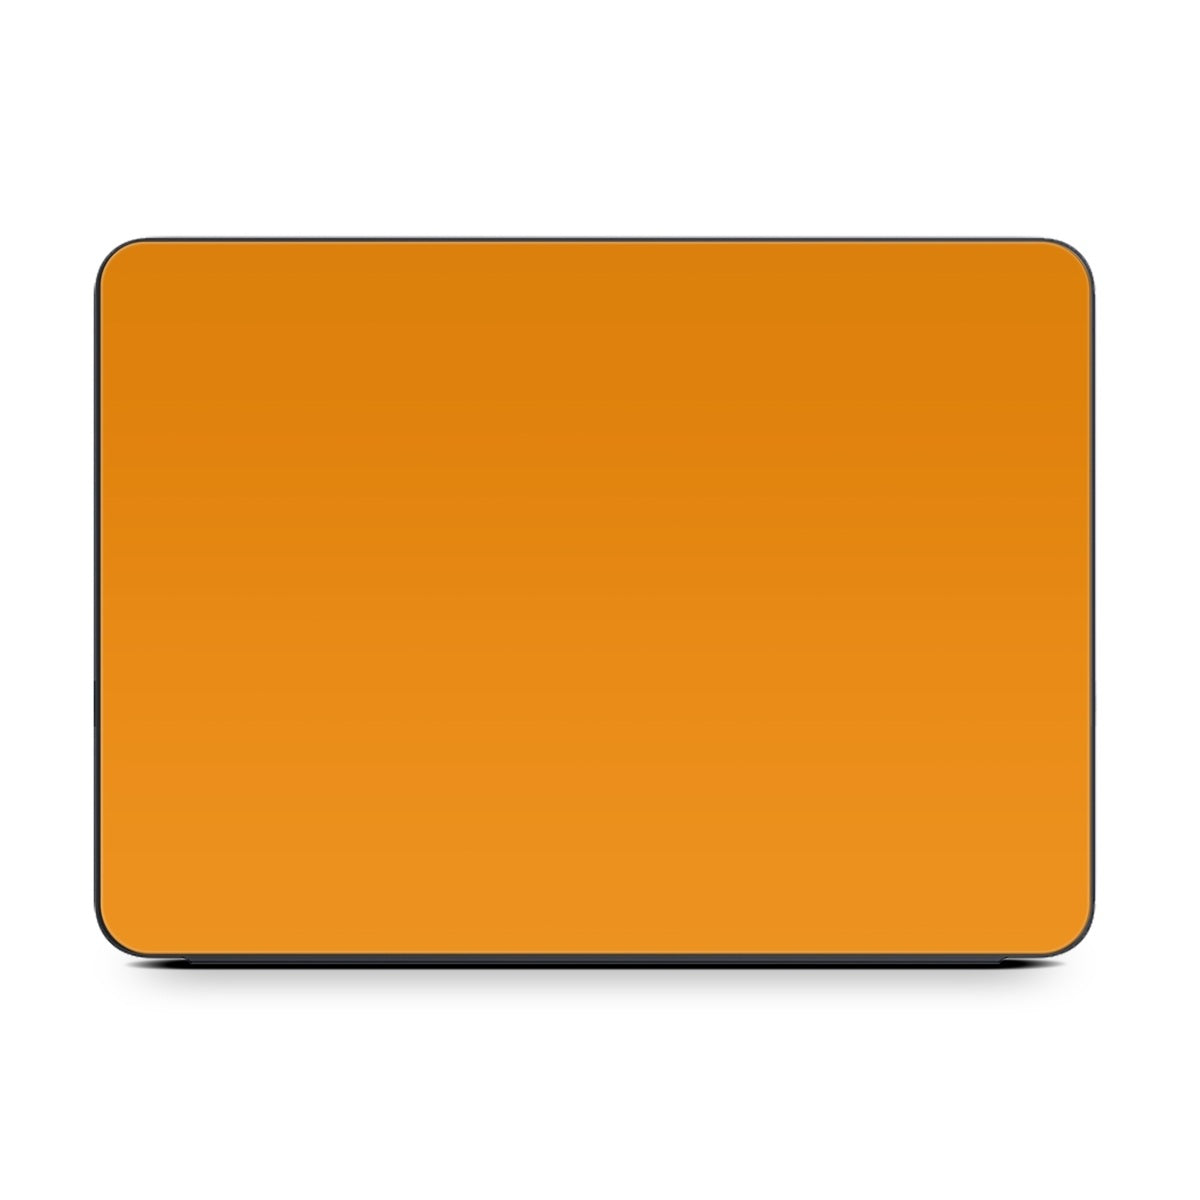 Solid State Orange - Apple Smart Keyboard Folio Skin